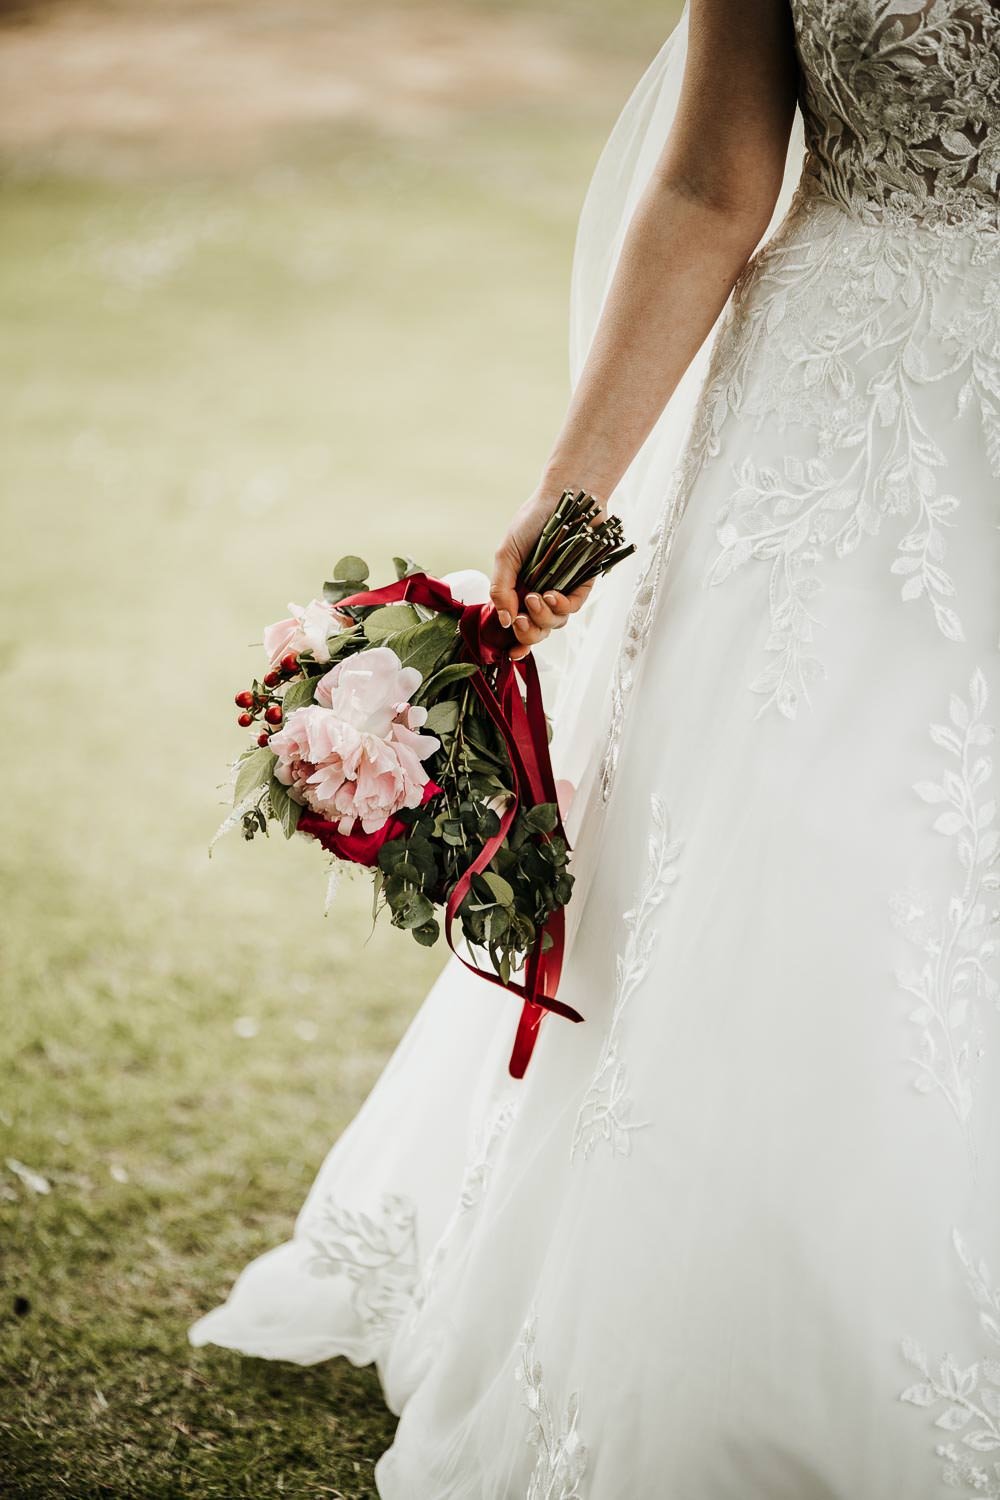 Rose bouquet held beside wedding dress skirt by bride